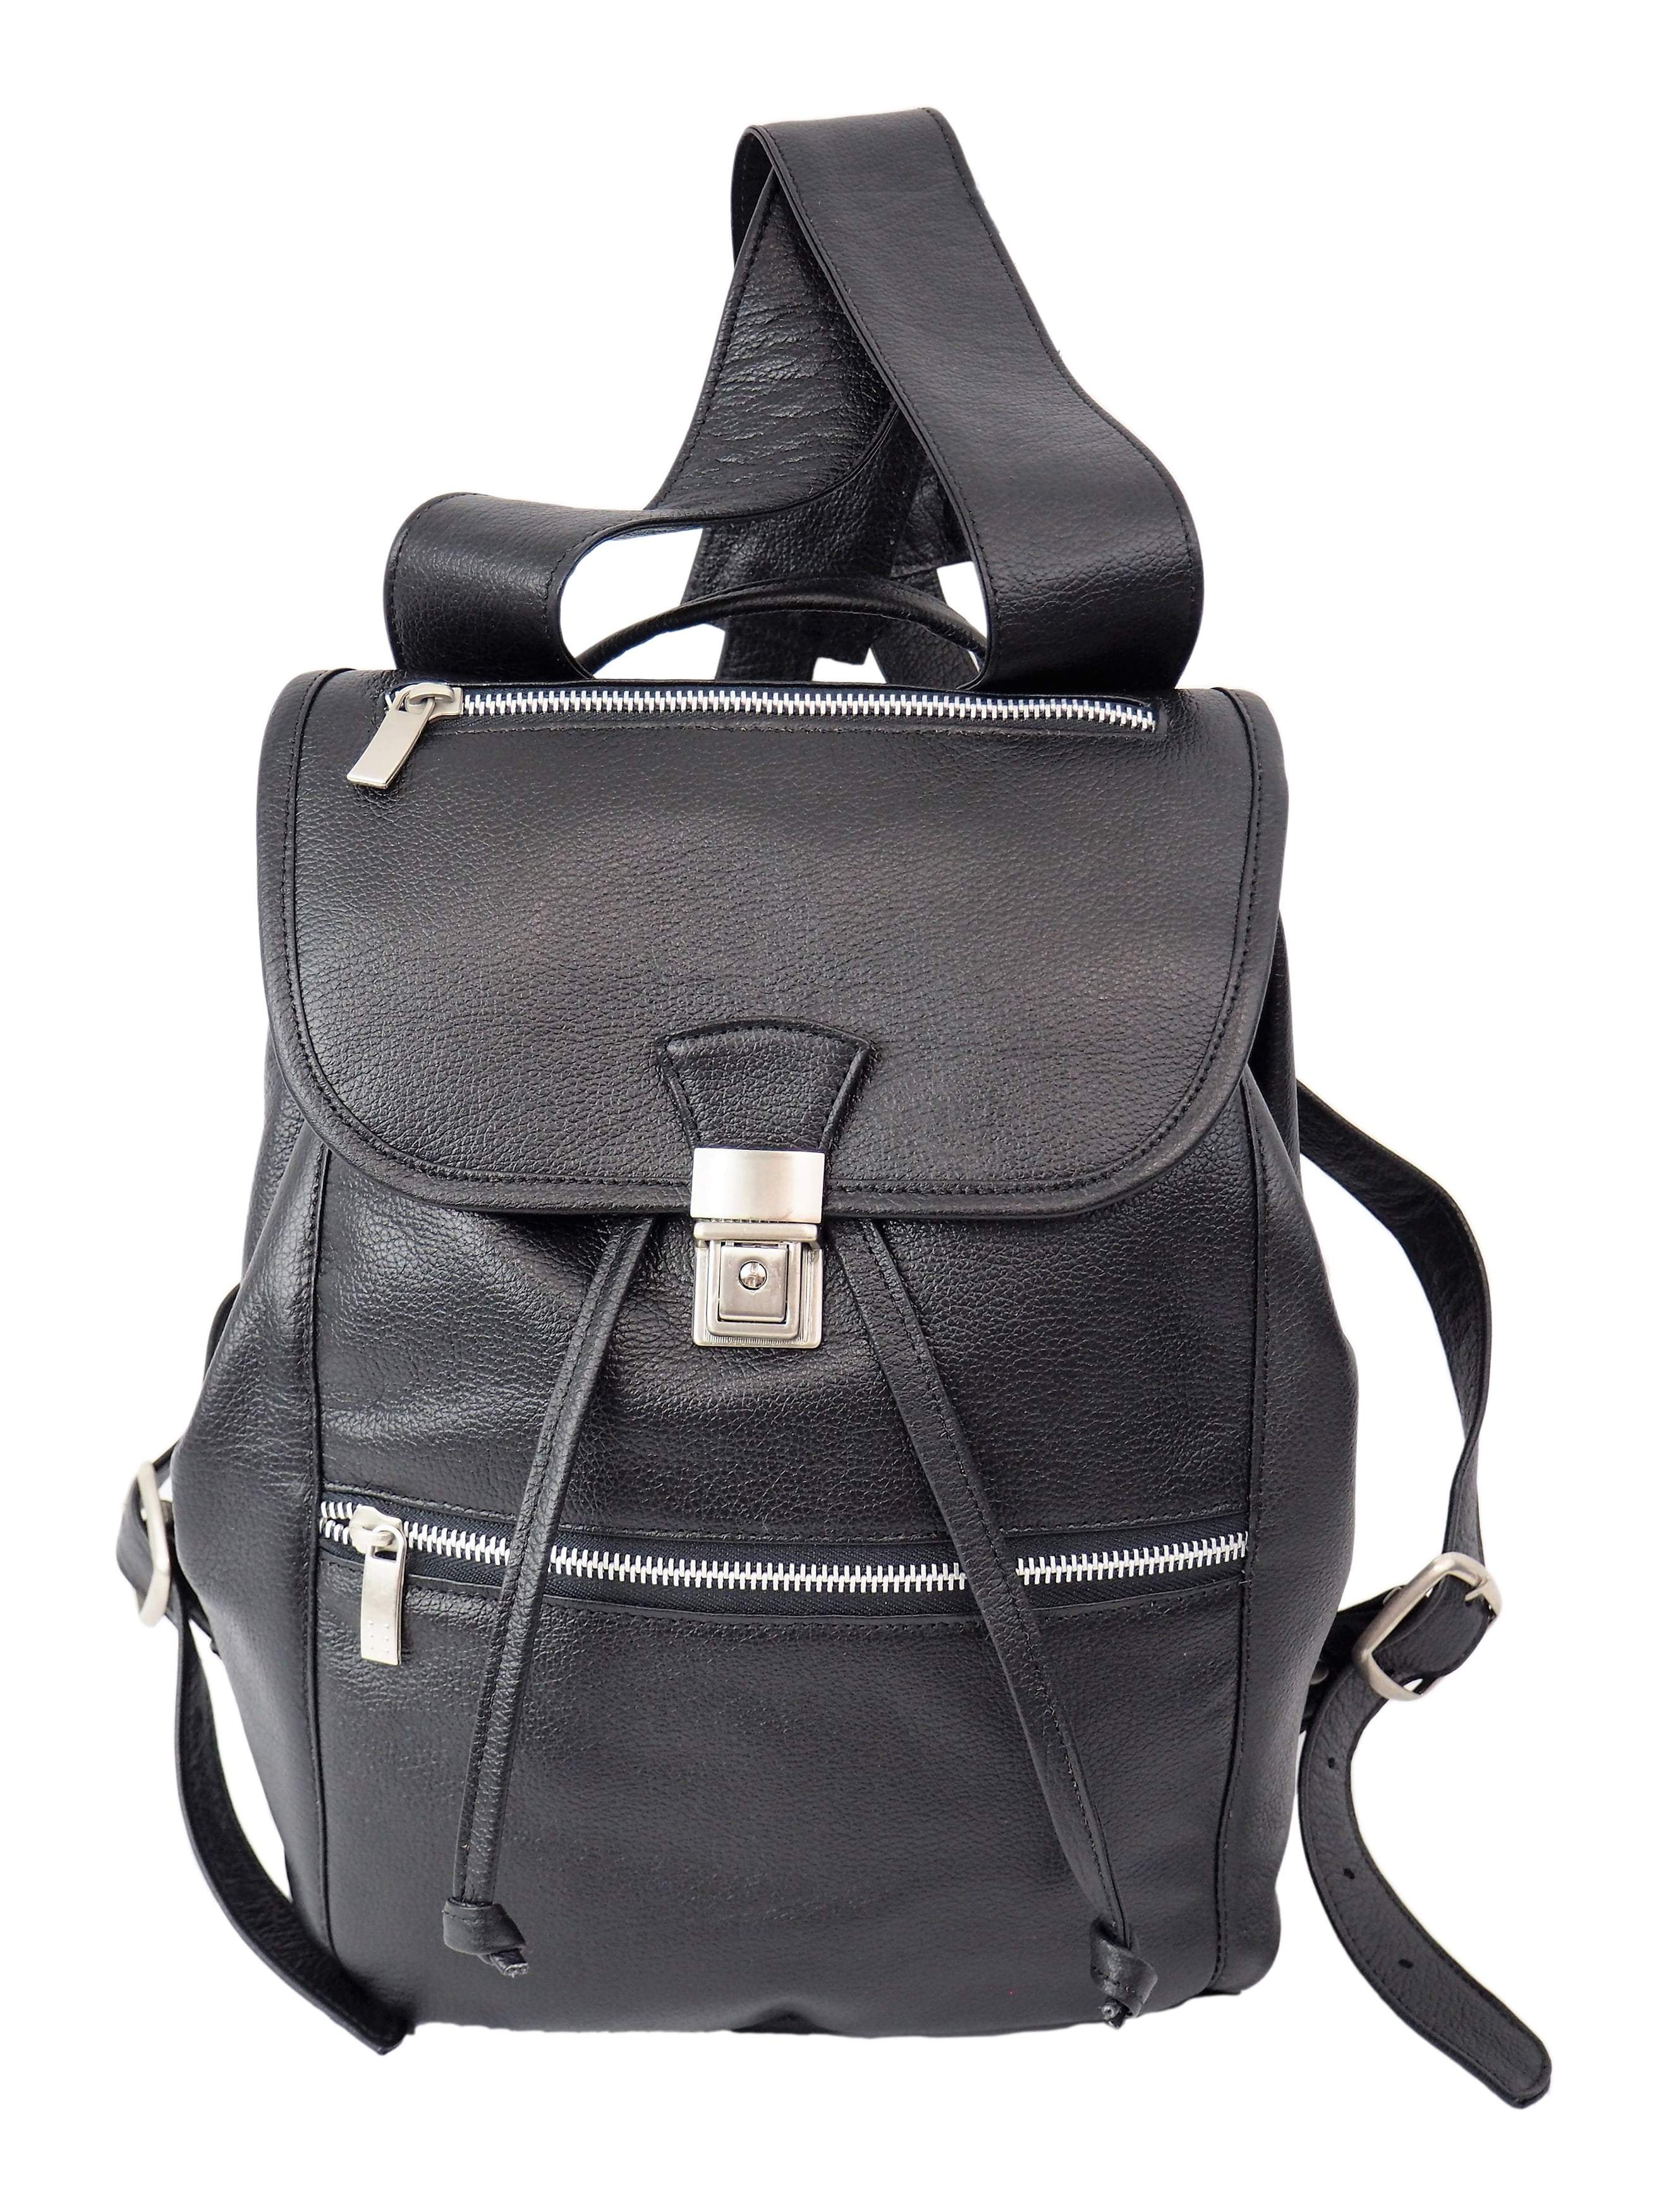 Leather Drawstring Backpack - Walmart.com